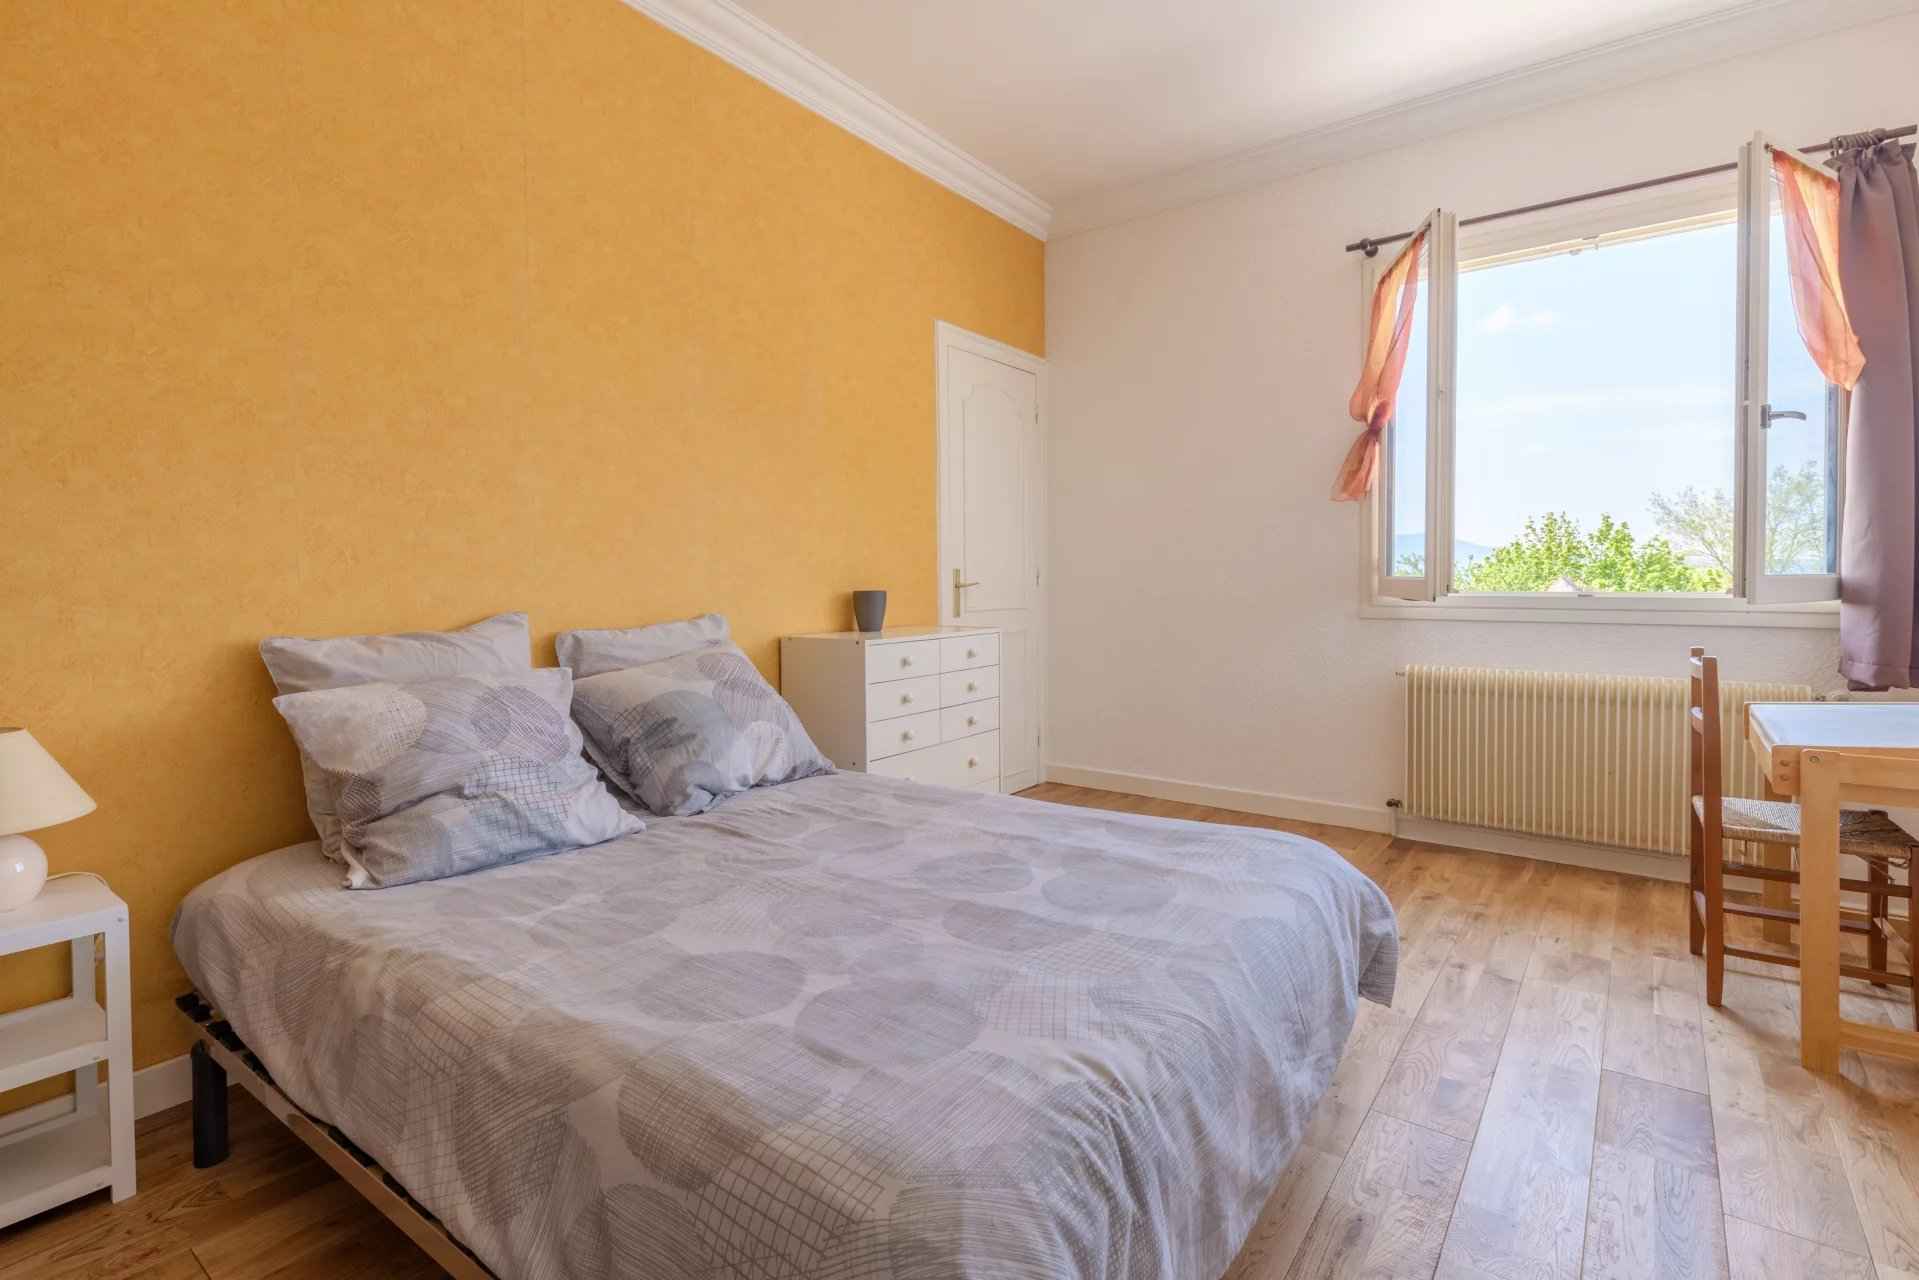 Barnes Lyon, prestigious real estate agency - Bedroom of a house in Trévoux